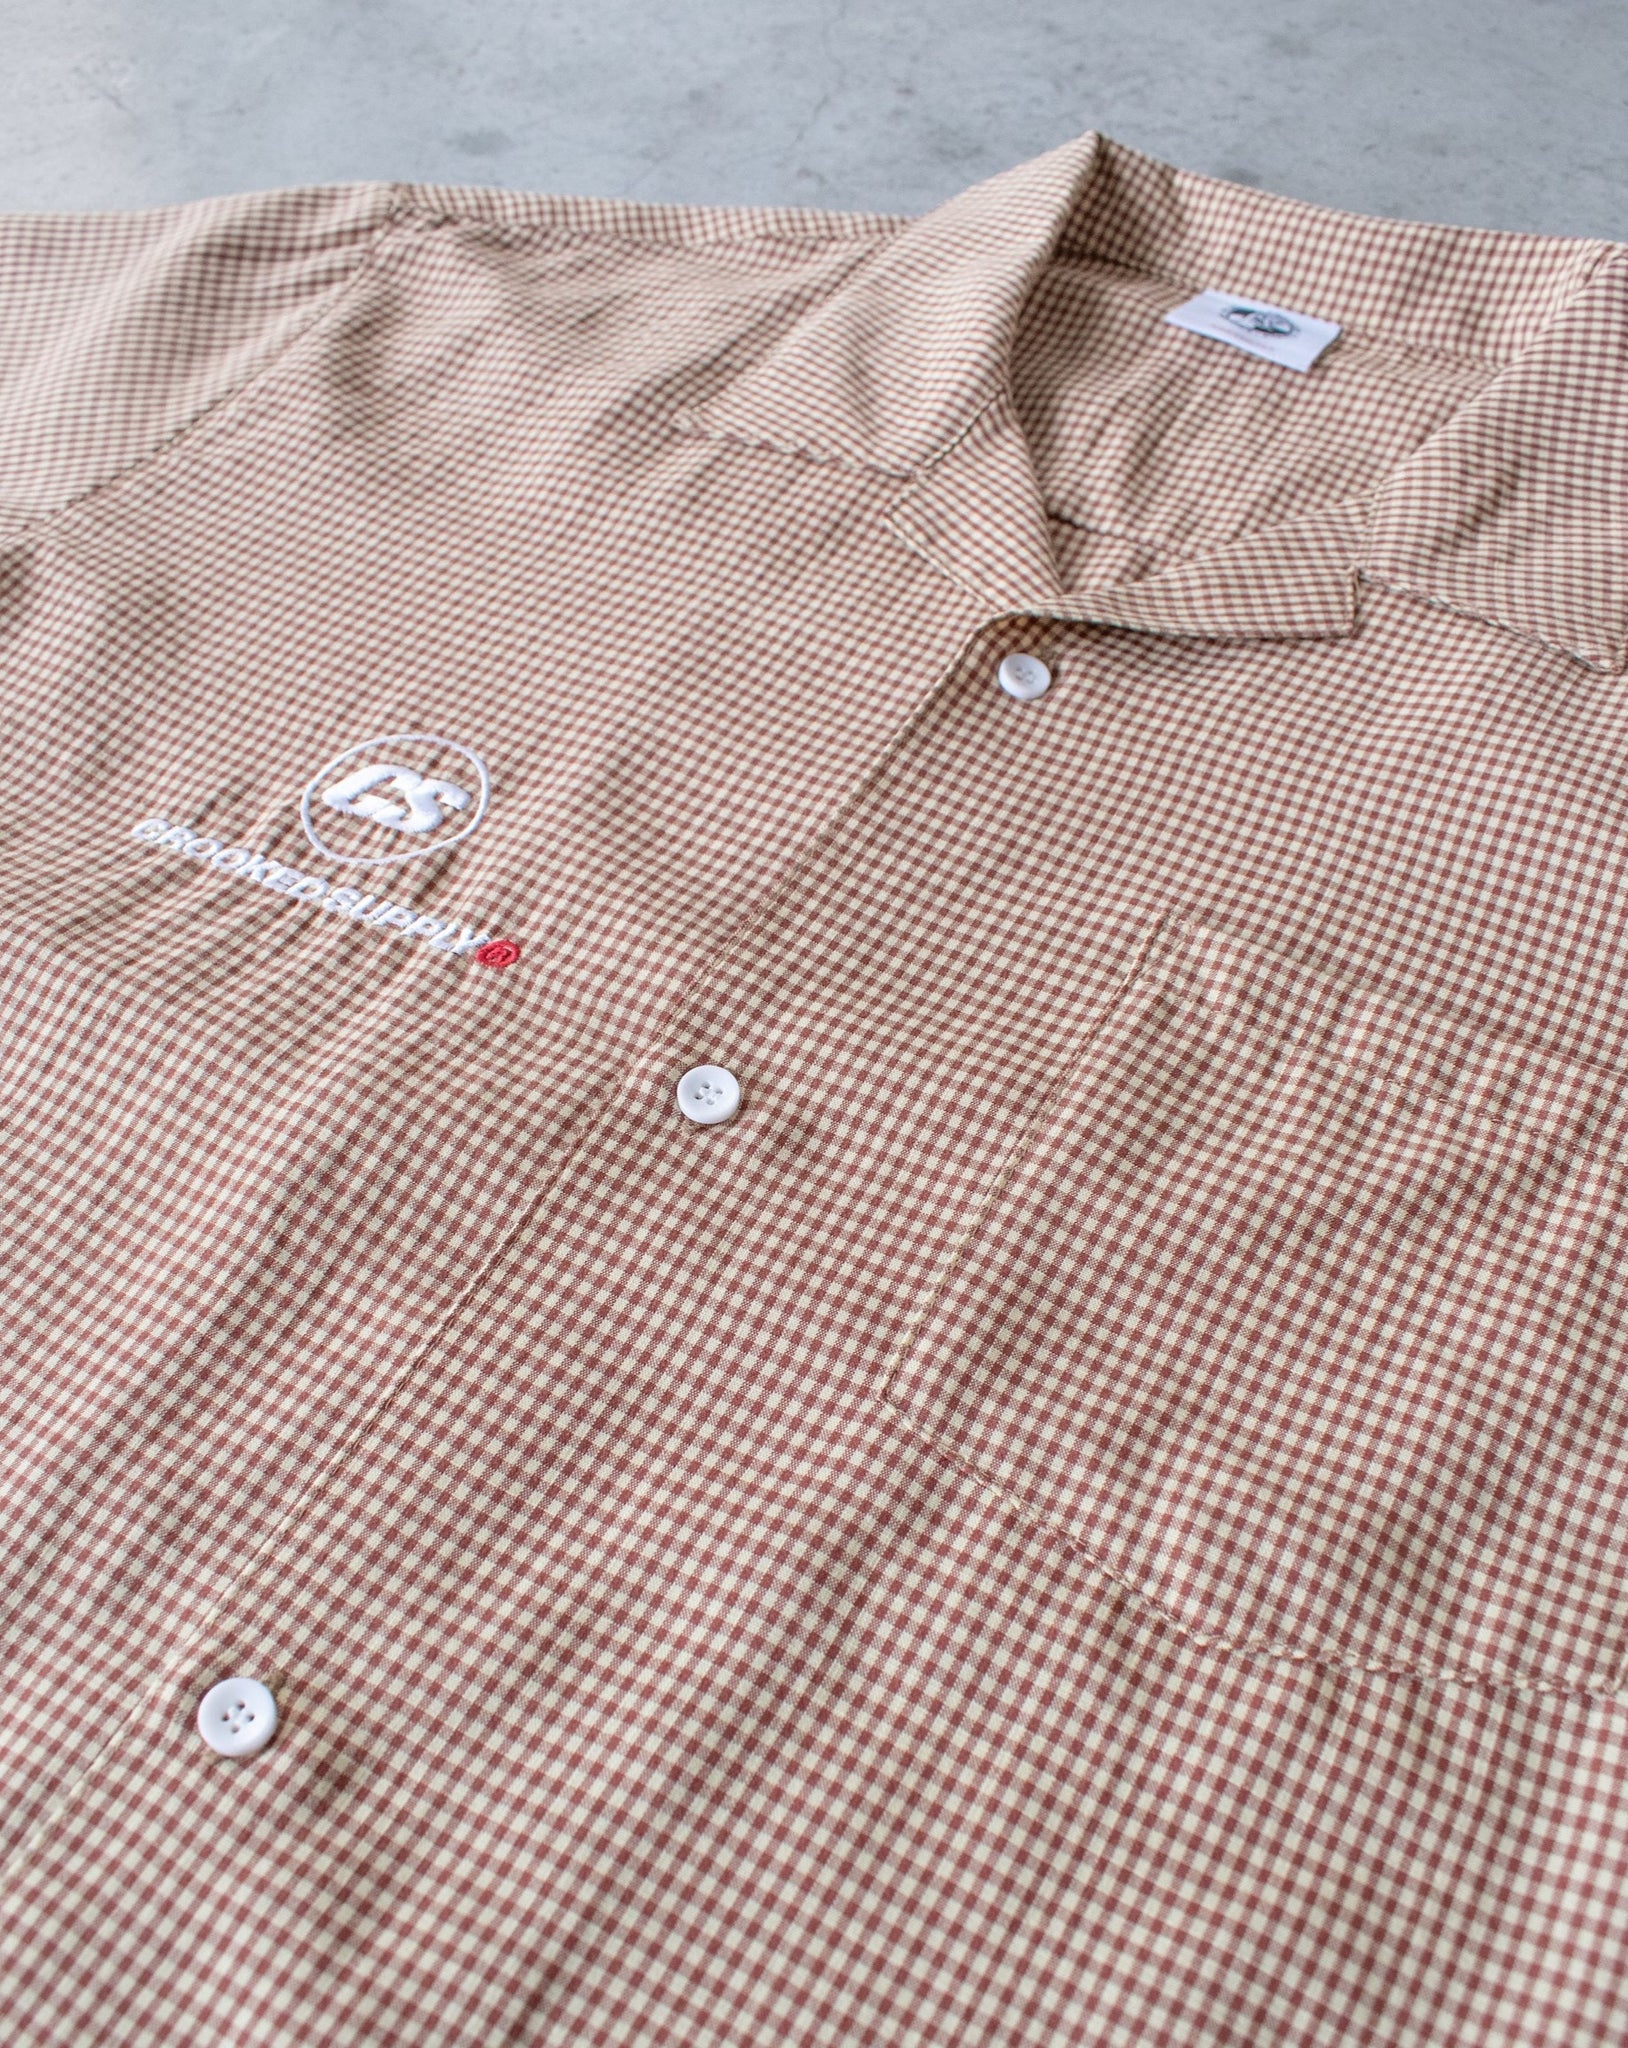 (New) Relax Checkered Shirt - Brown & Cream